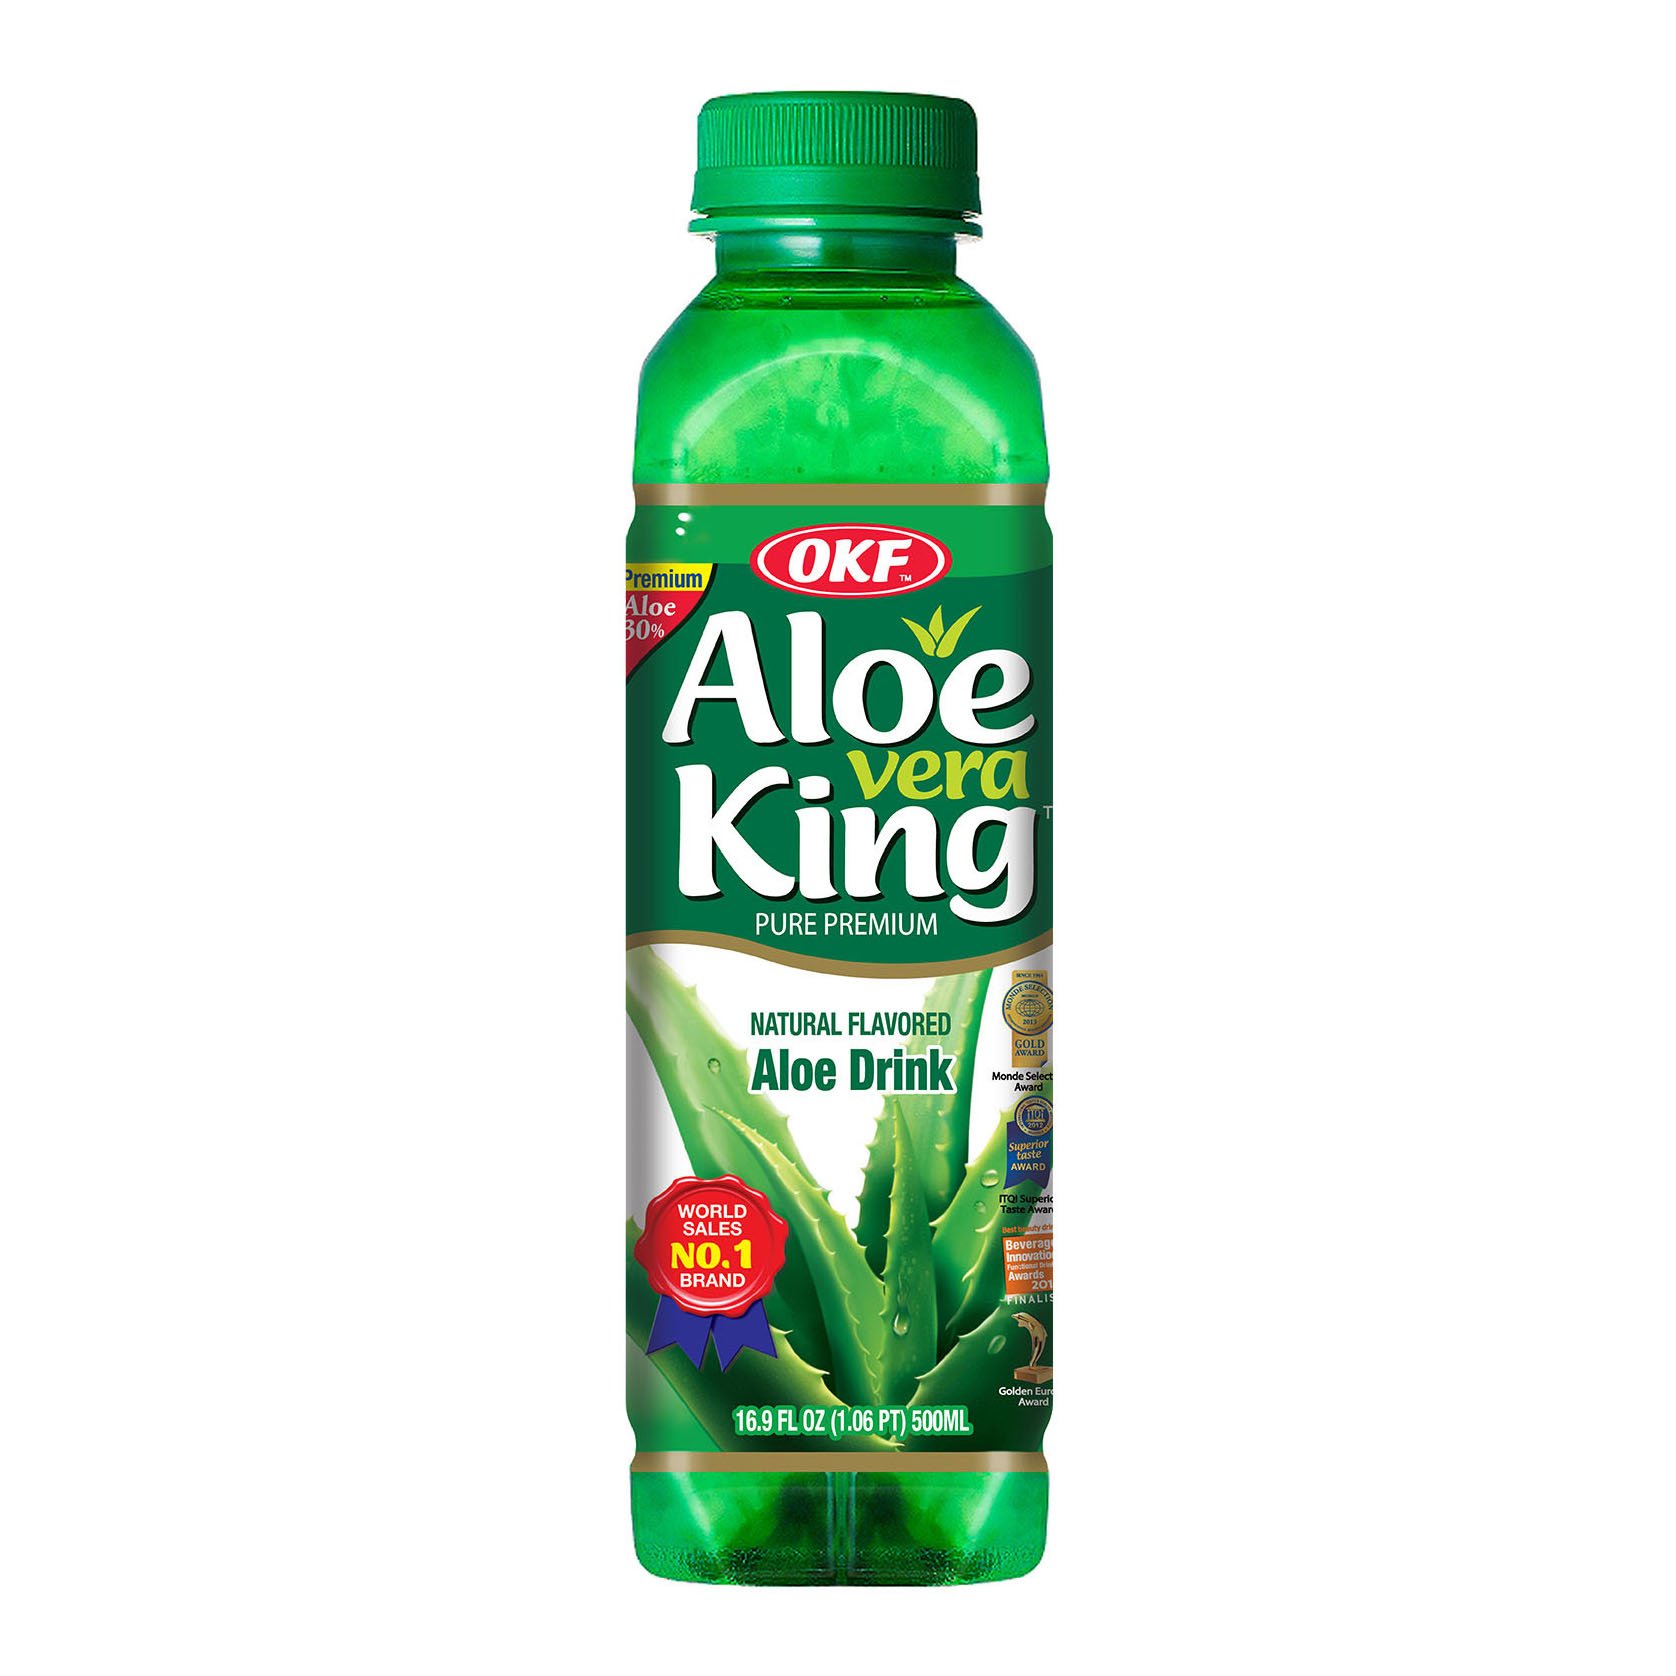 Okf Aloe Vera King Original Shop Juice At H E B